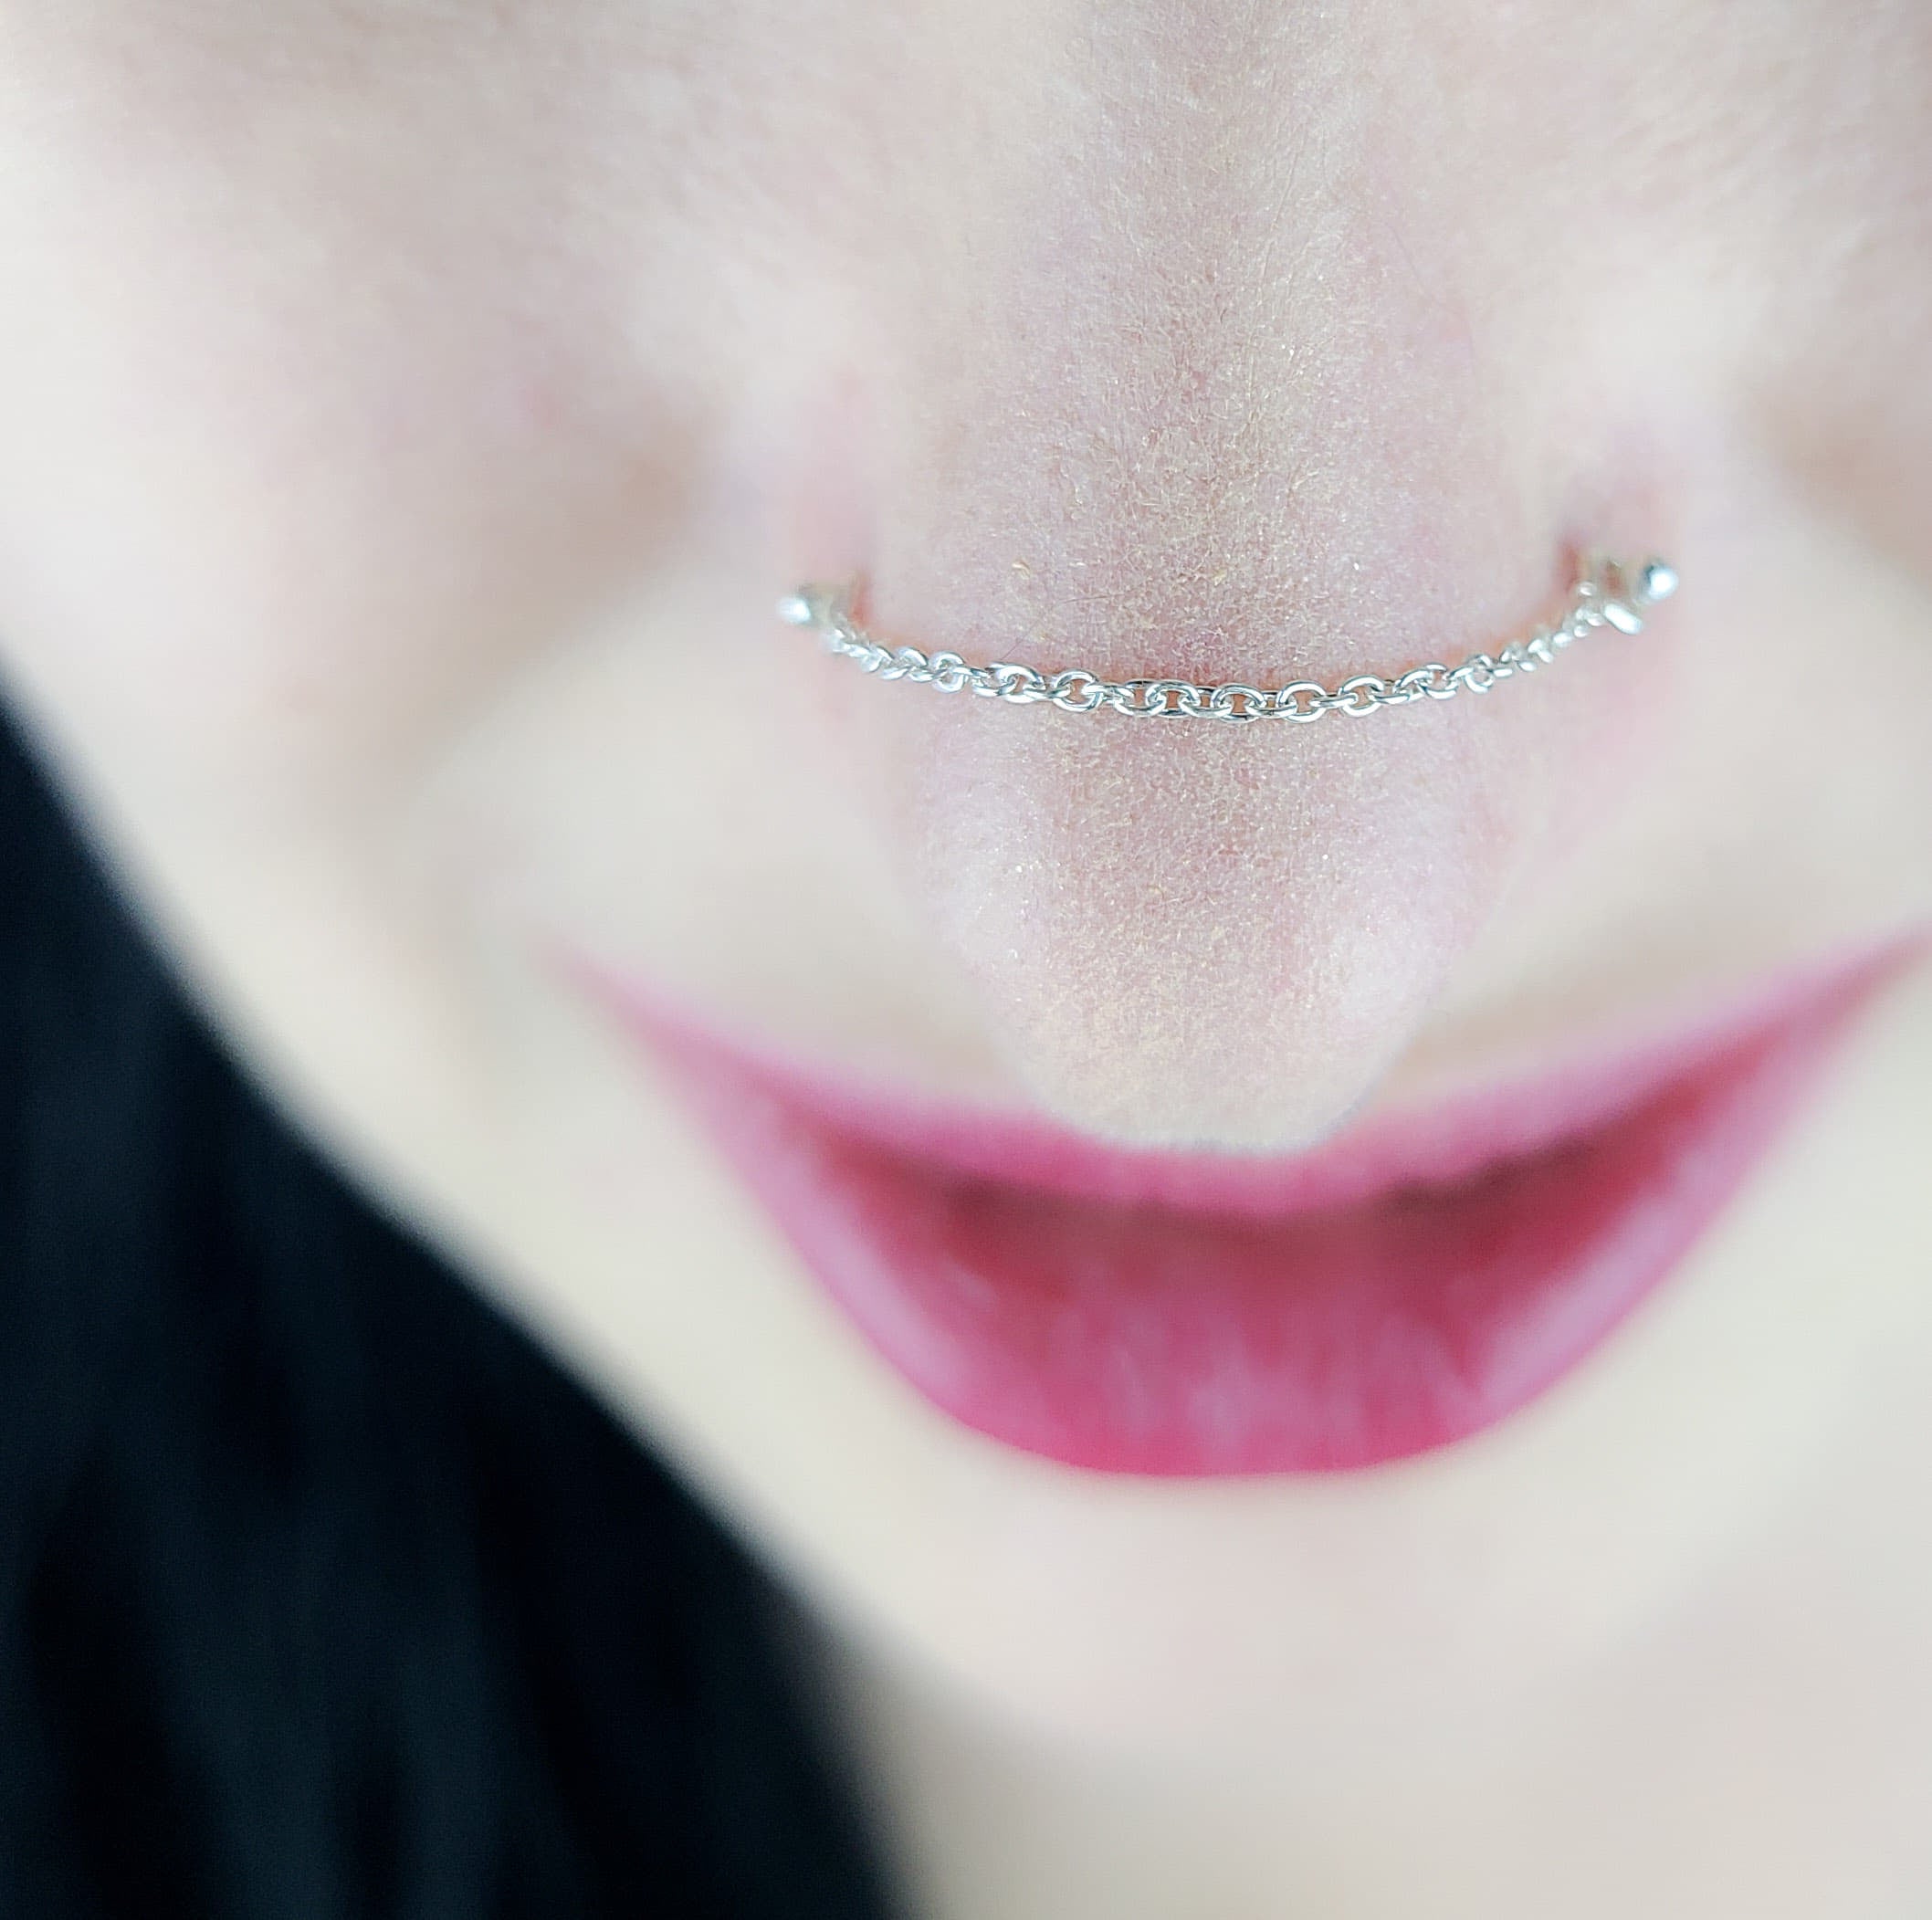 Nostril Piercing Chain | Fake Nose Piercing Nostril | Fake Nostril Ring  Piercing - Ear - Aliexpress